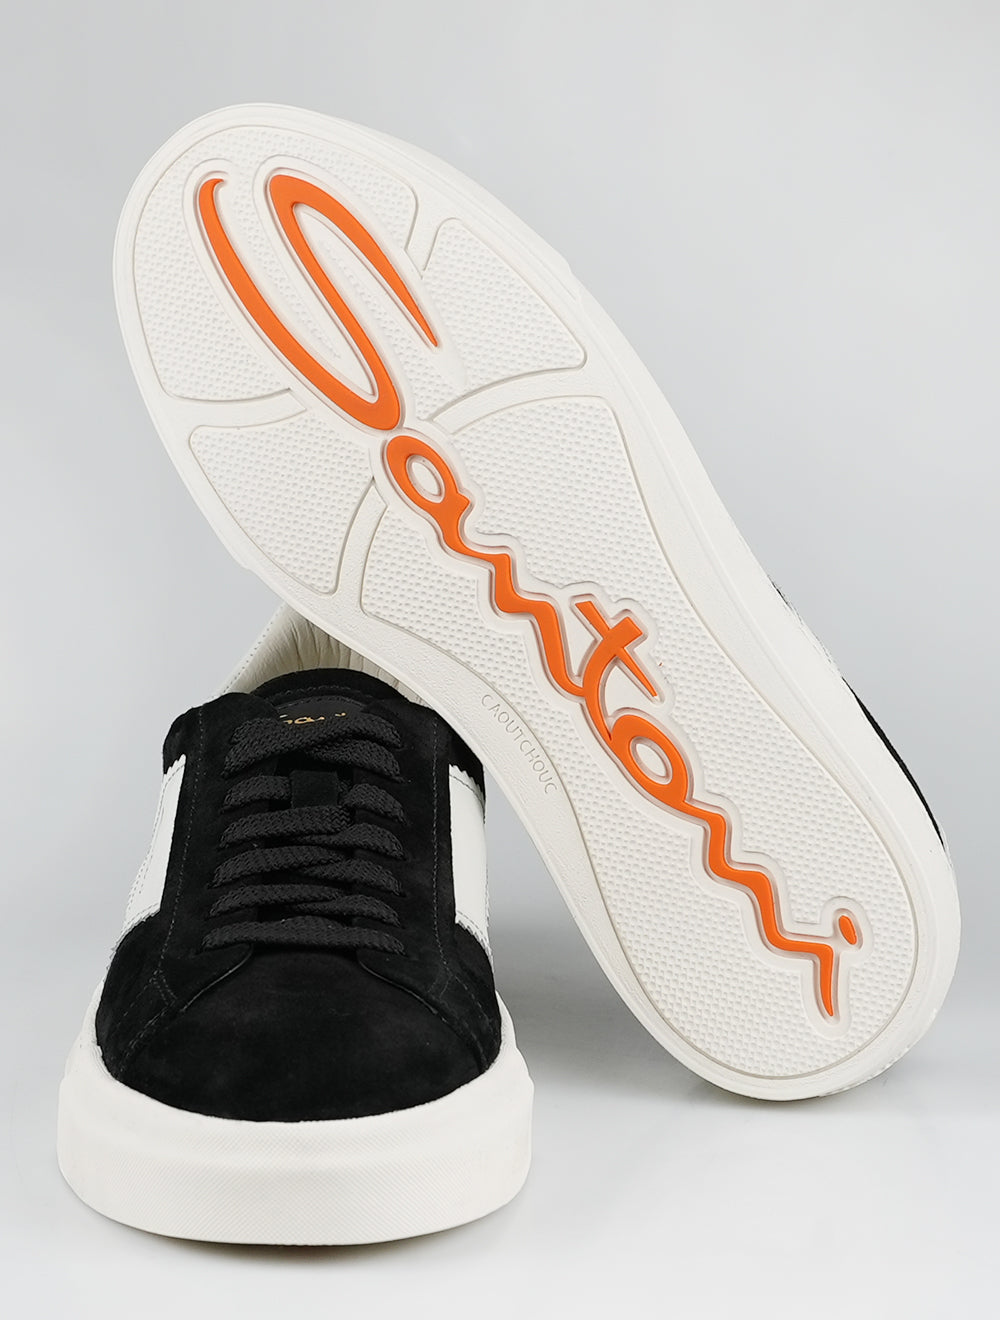 Santoni Black White Leather Suede Sneakers